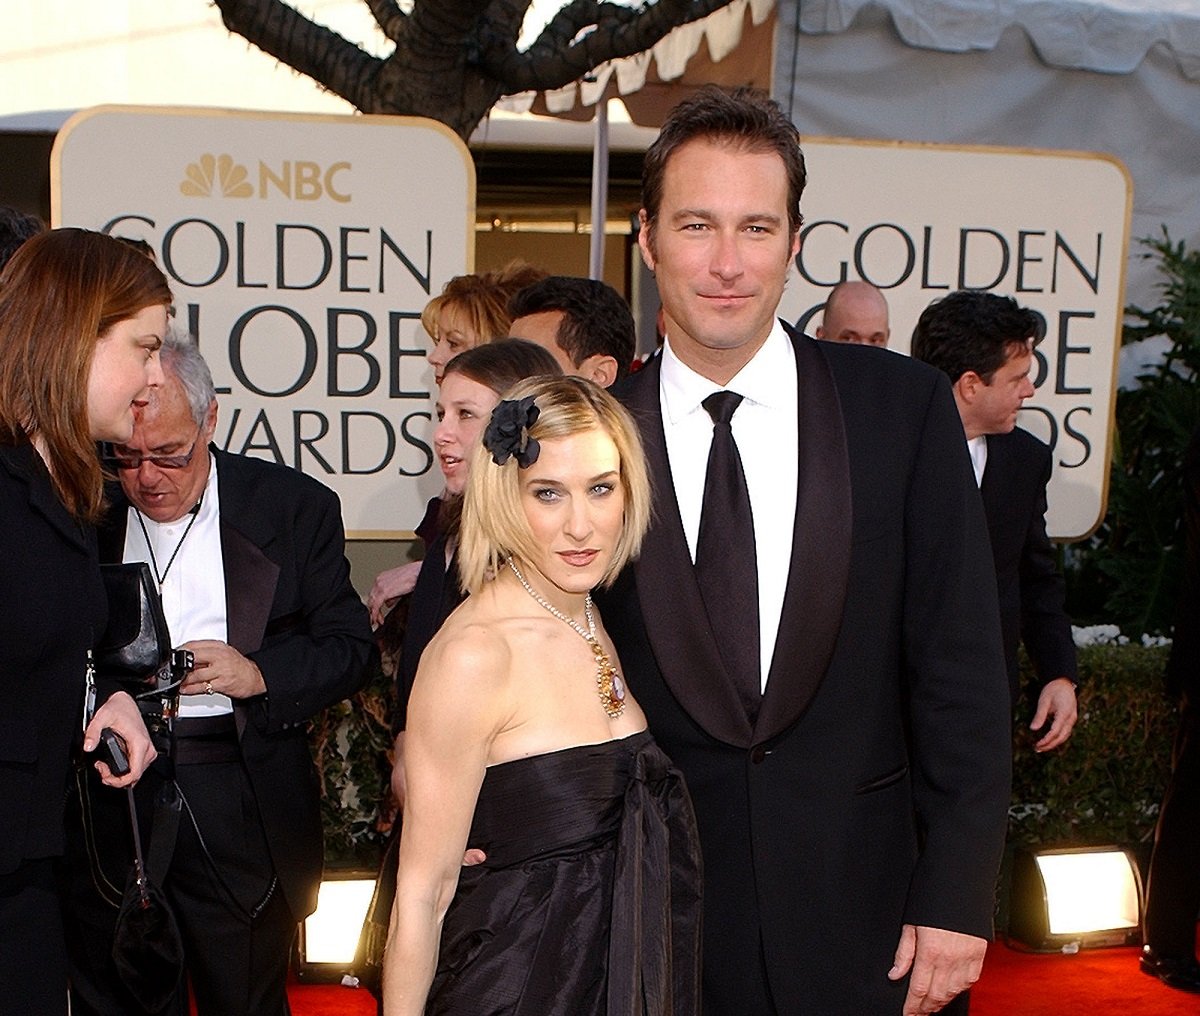 Sarah Jessica Parker and John Corbett arrive at the Golden Globe Awards at the Beverly Hilton January 20, 2002